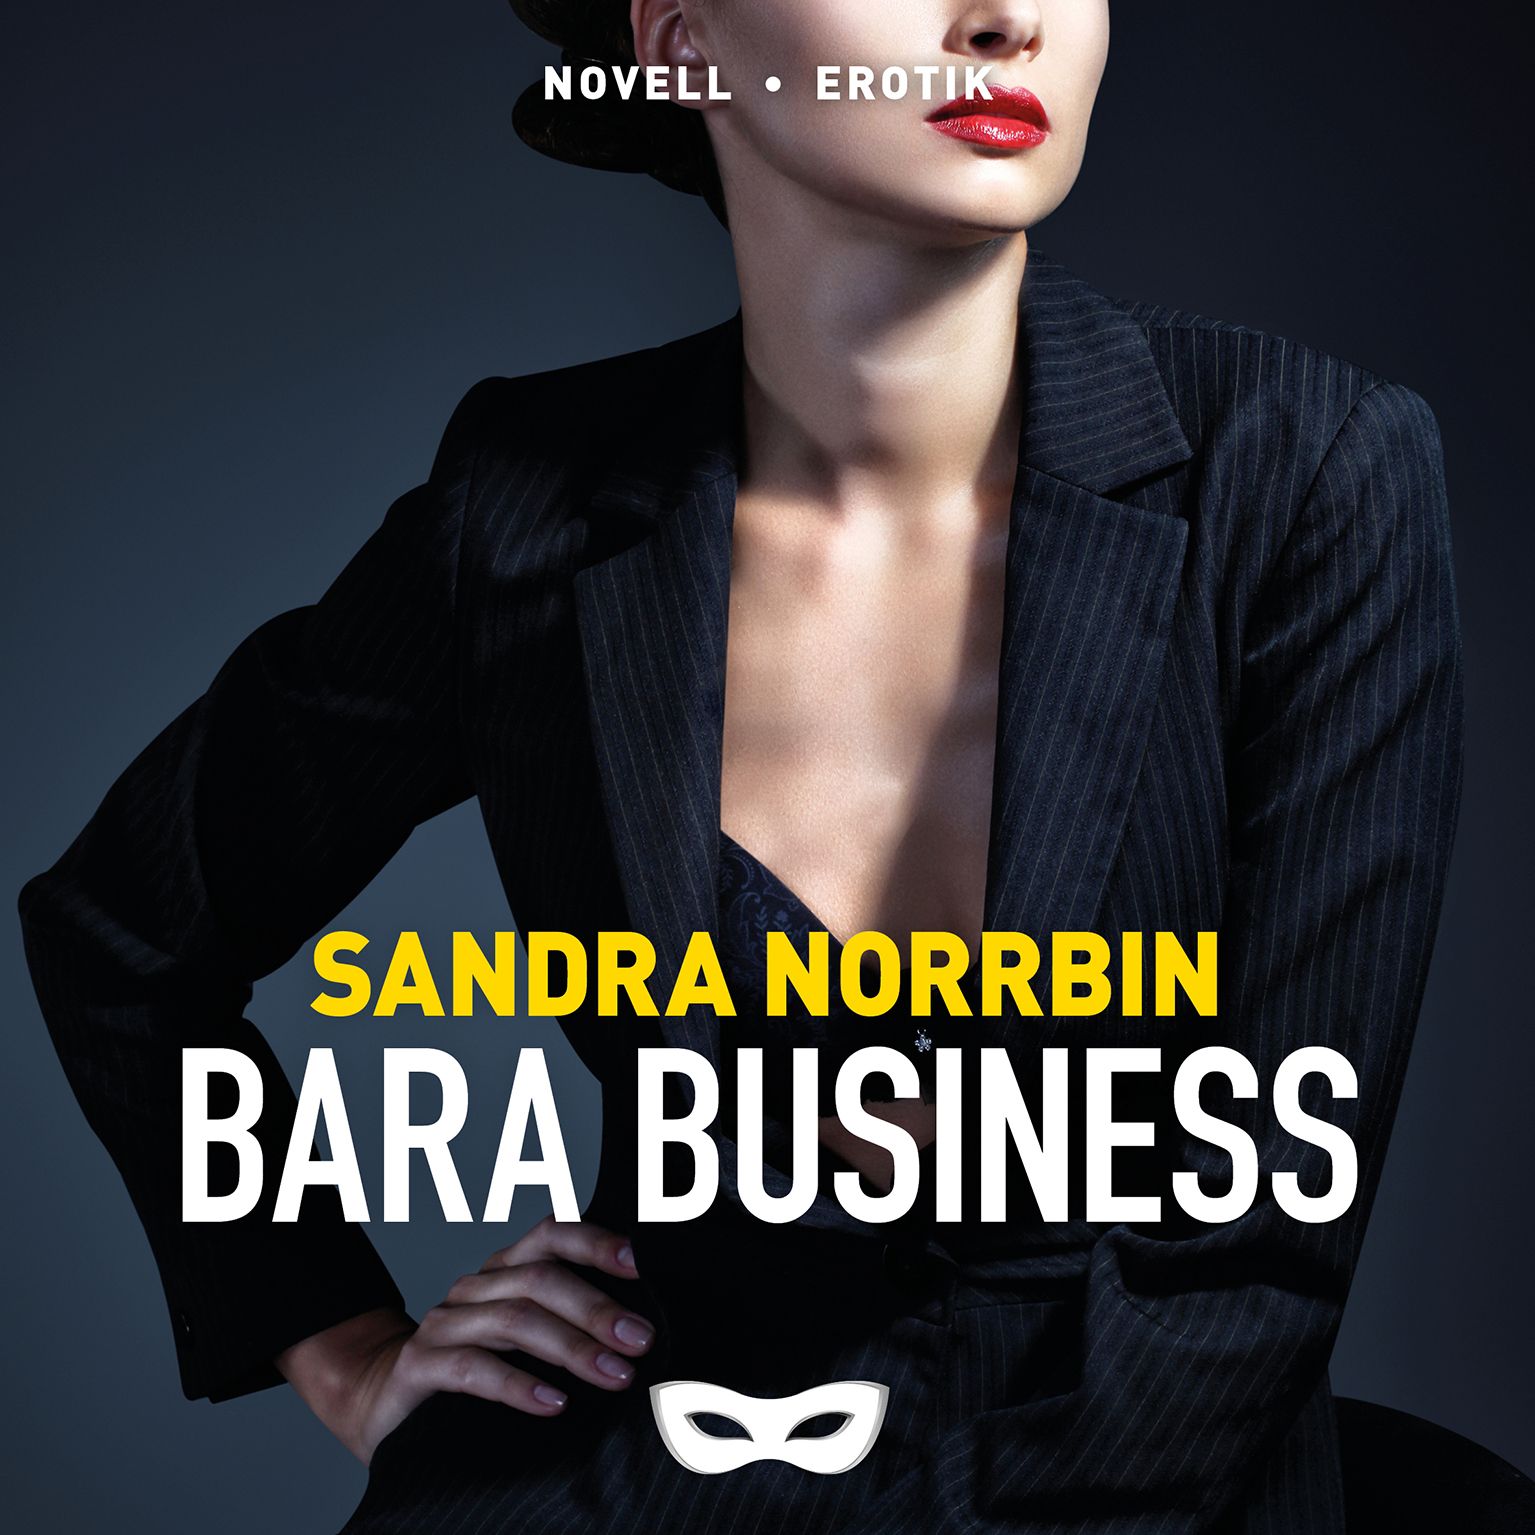 Bara business, audiobook by Sandra Norrbin